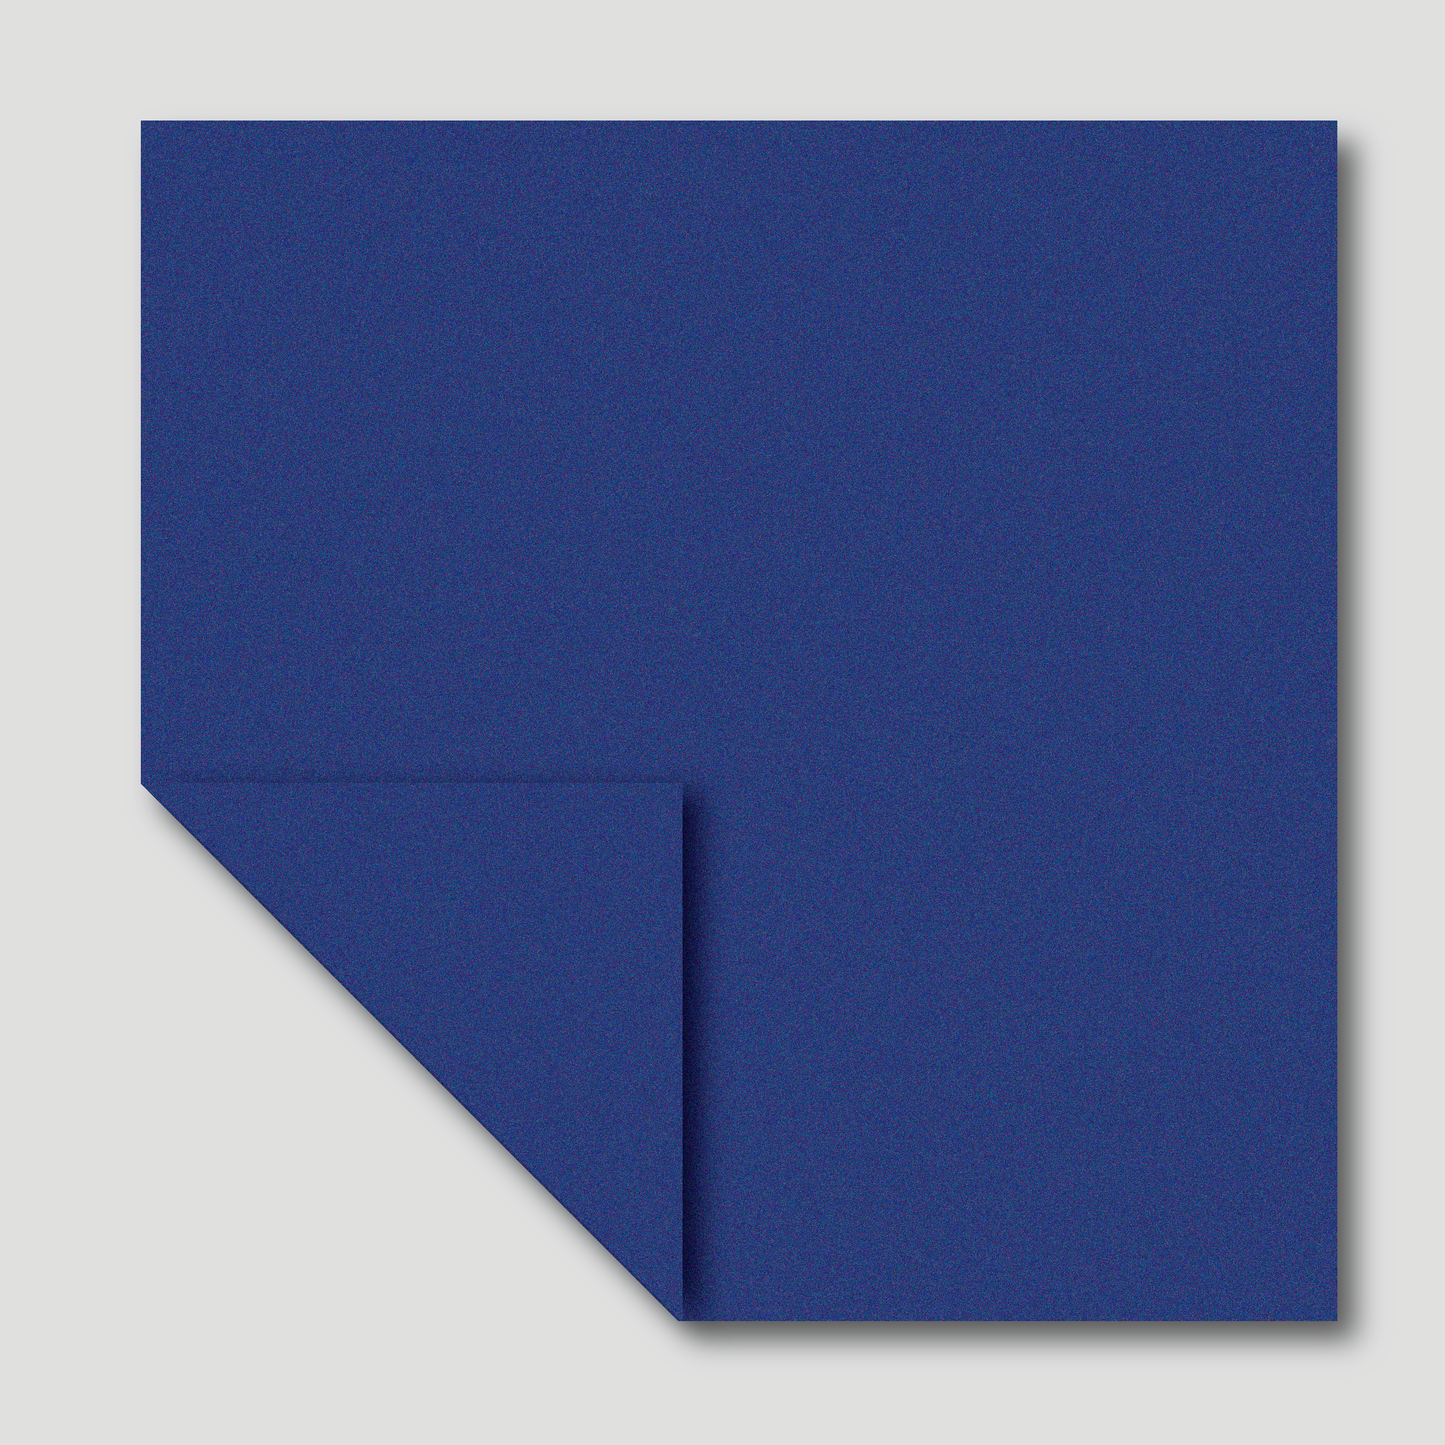 [Taro's Origami Studio] Biotope Jumbo 13.75 Inch / 35cm Single Color (Magellan Blue) 10 Sheets (All Same Color) Premium Japanese Paper for Advanced Folders (Made in Japan)